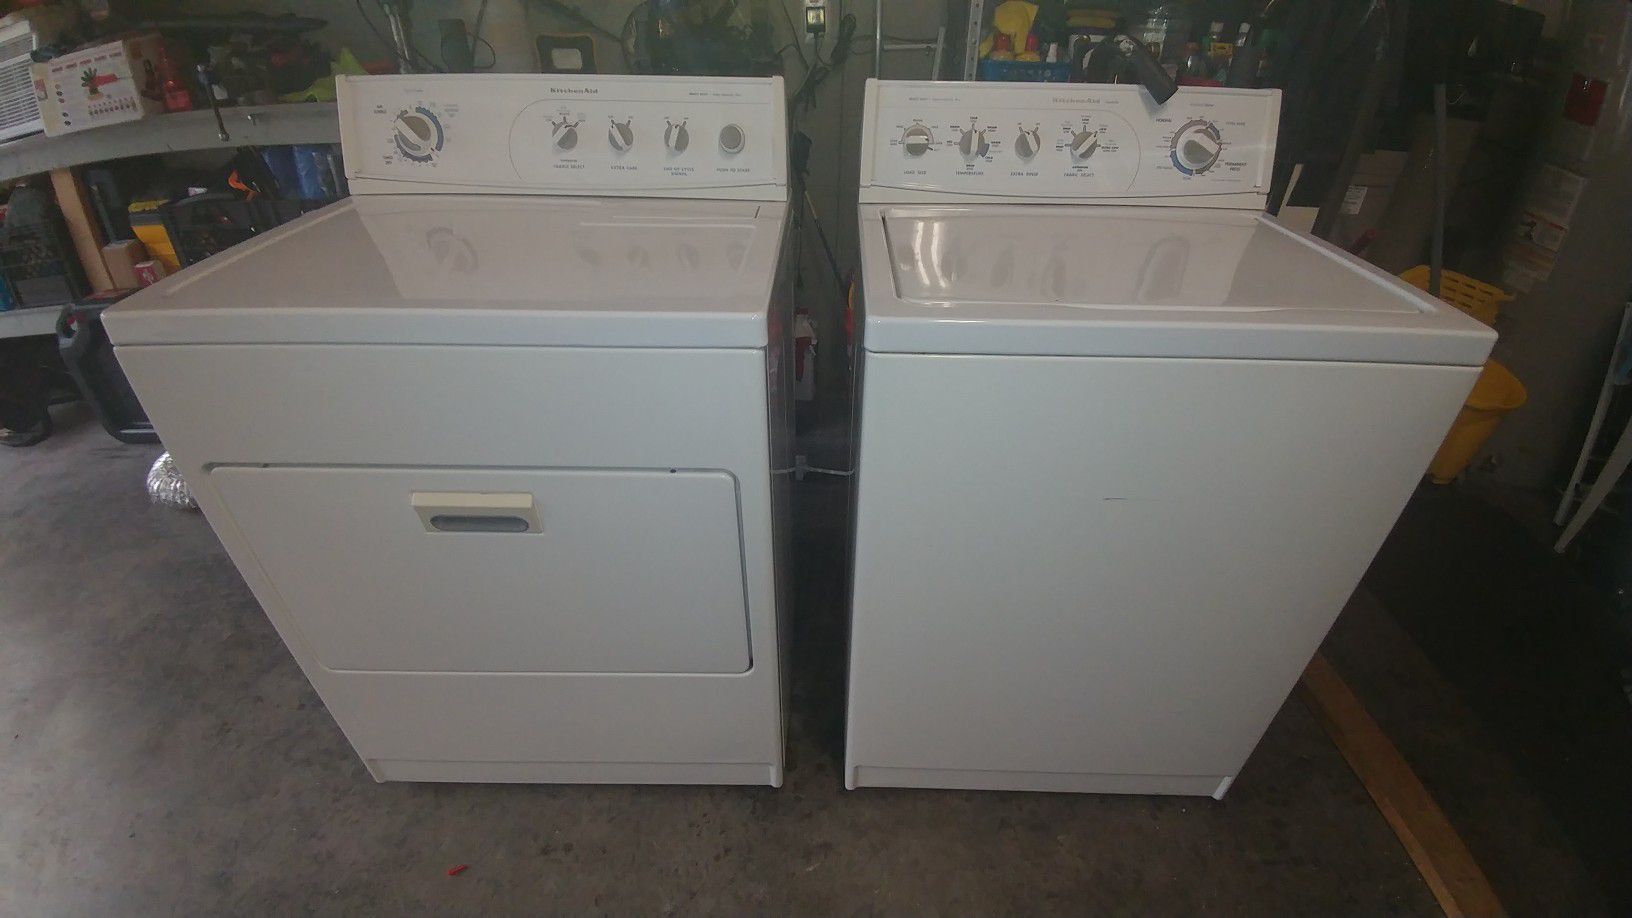 KitchenAid Washer and Dryer For Sale/KitchenAid Lavadora y Secador A La Venta